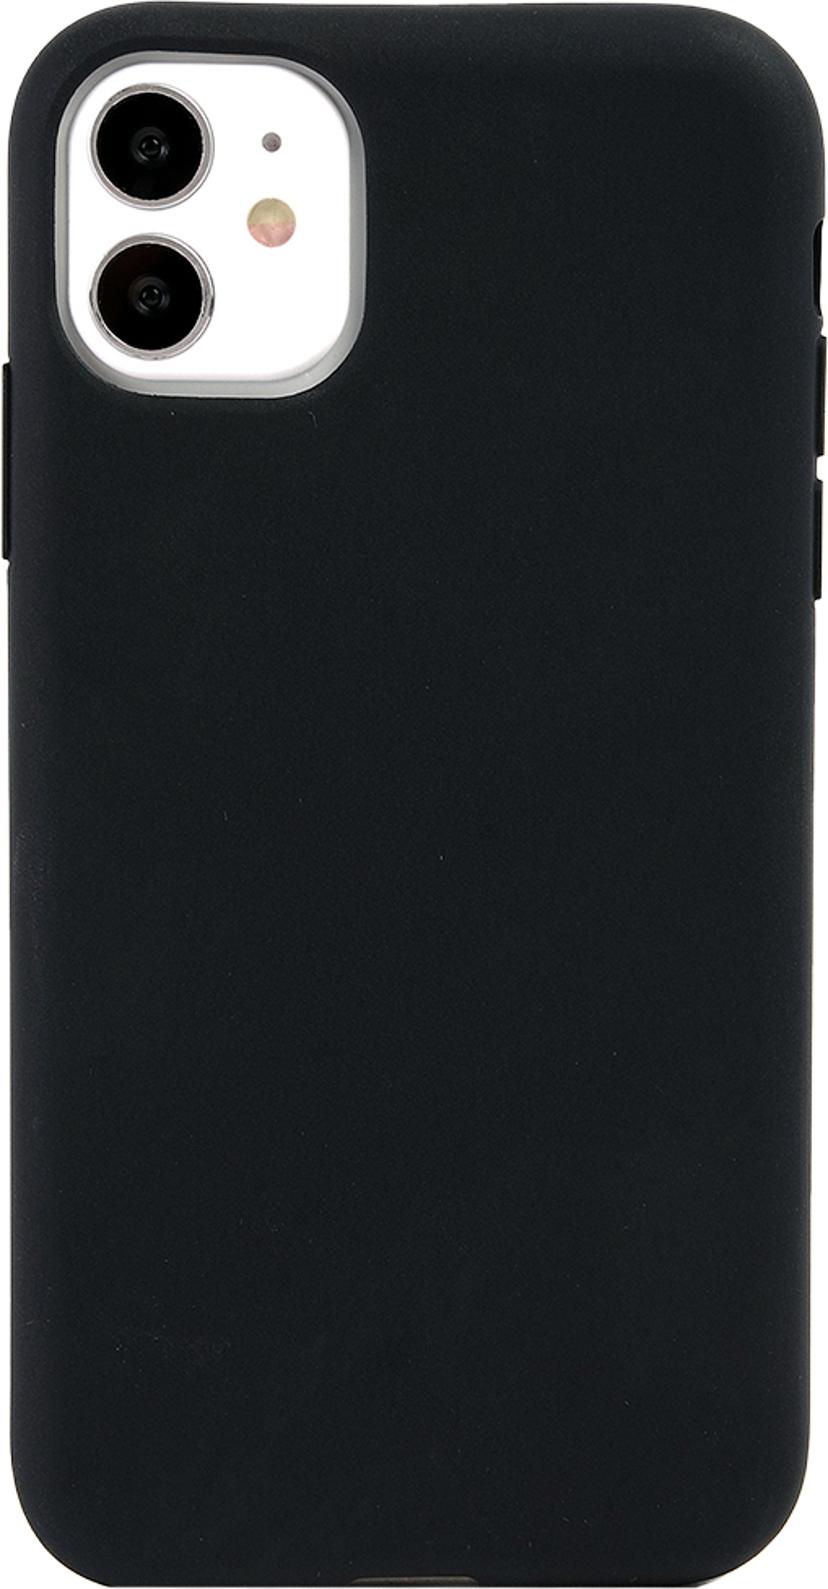 Cirafon Recycled Case iPhone 11 Musta